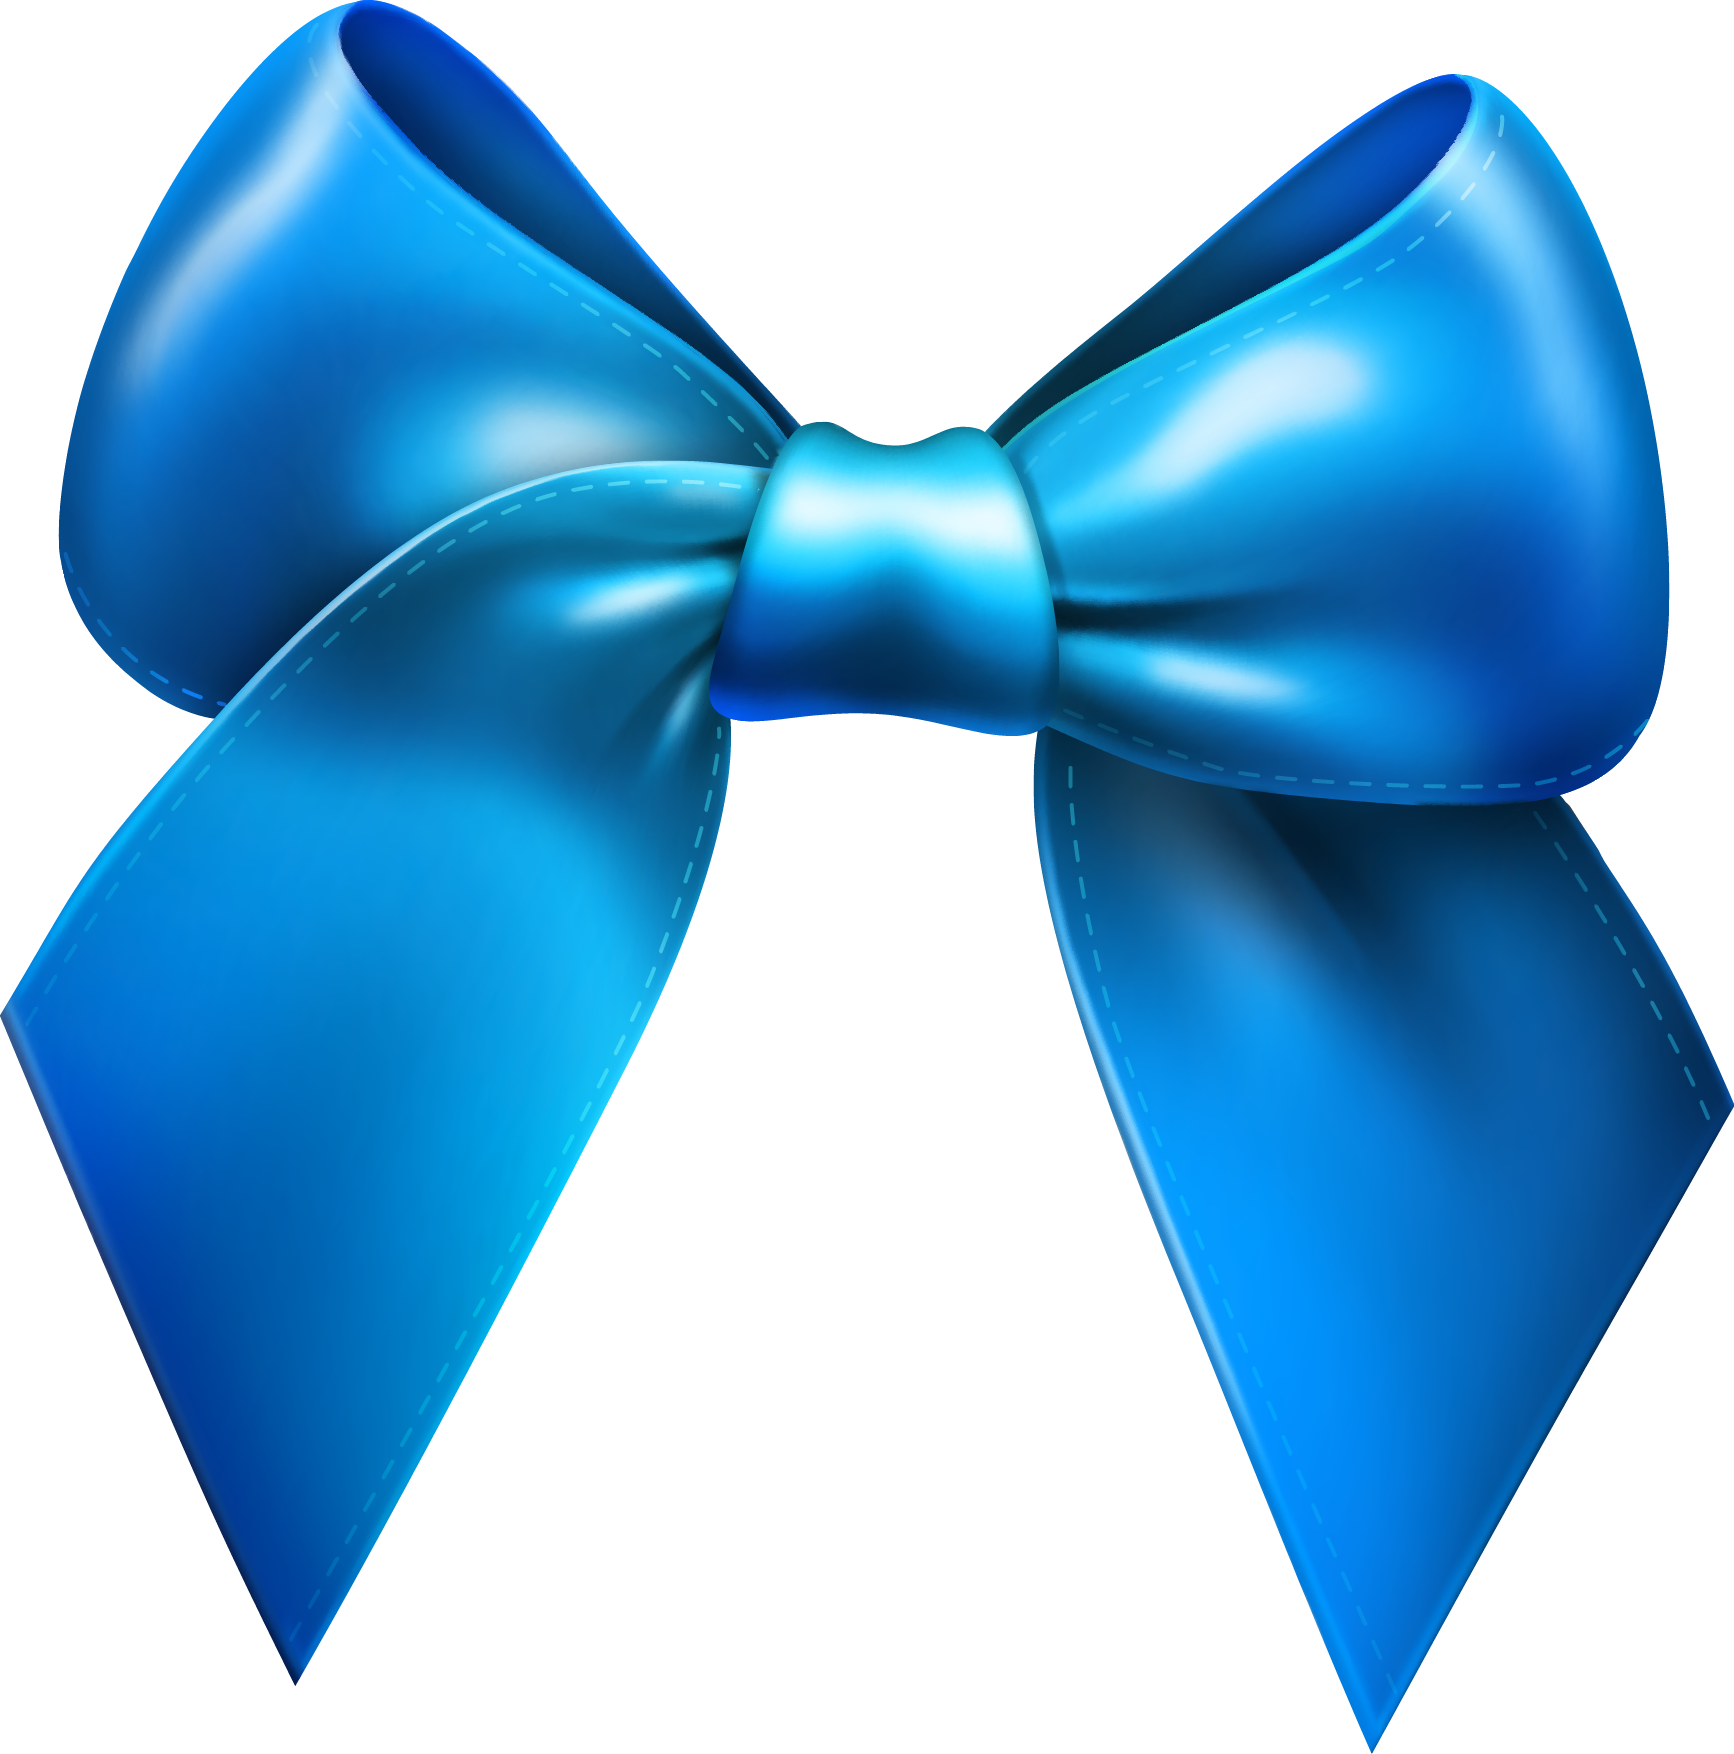 Ribbon Clip art - Blue cartoon bow tie png download - 1734*1754 - Free  Transparent Ribbon png Download. - Clip Art Library